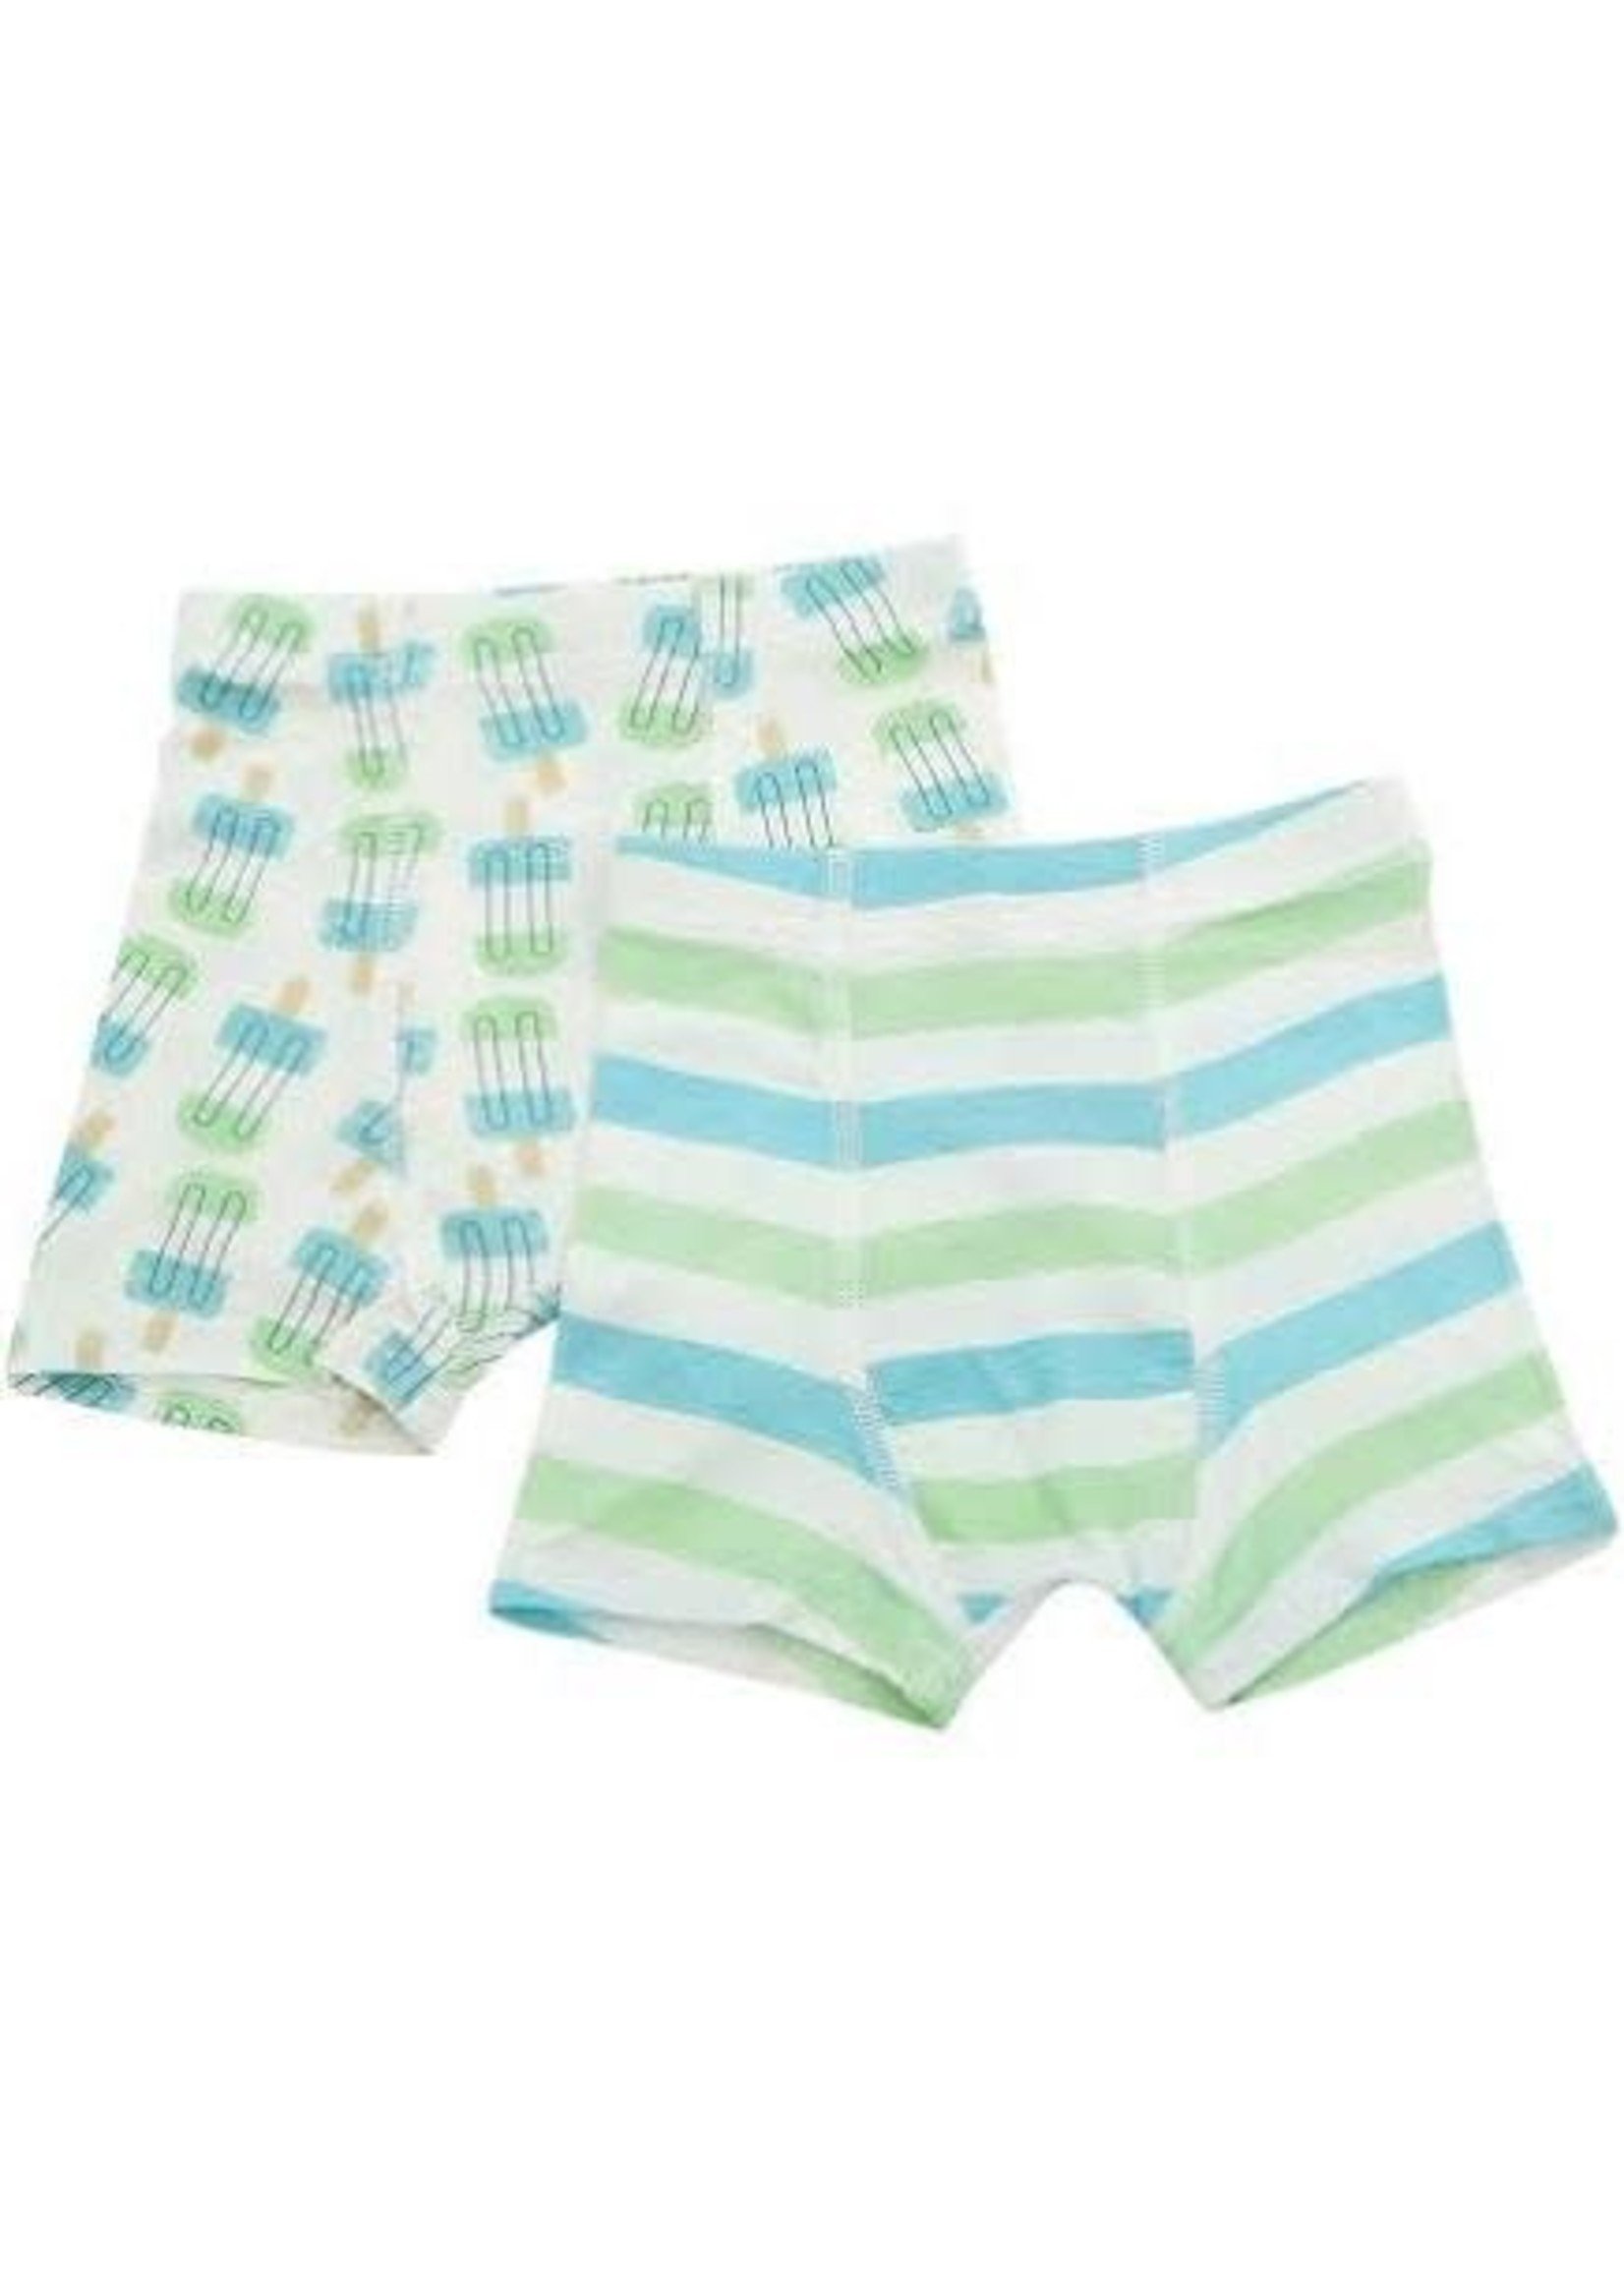 Silkberry Baby Silkberry Baby Bamboo Boys Underwear Shorts  2pk